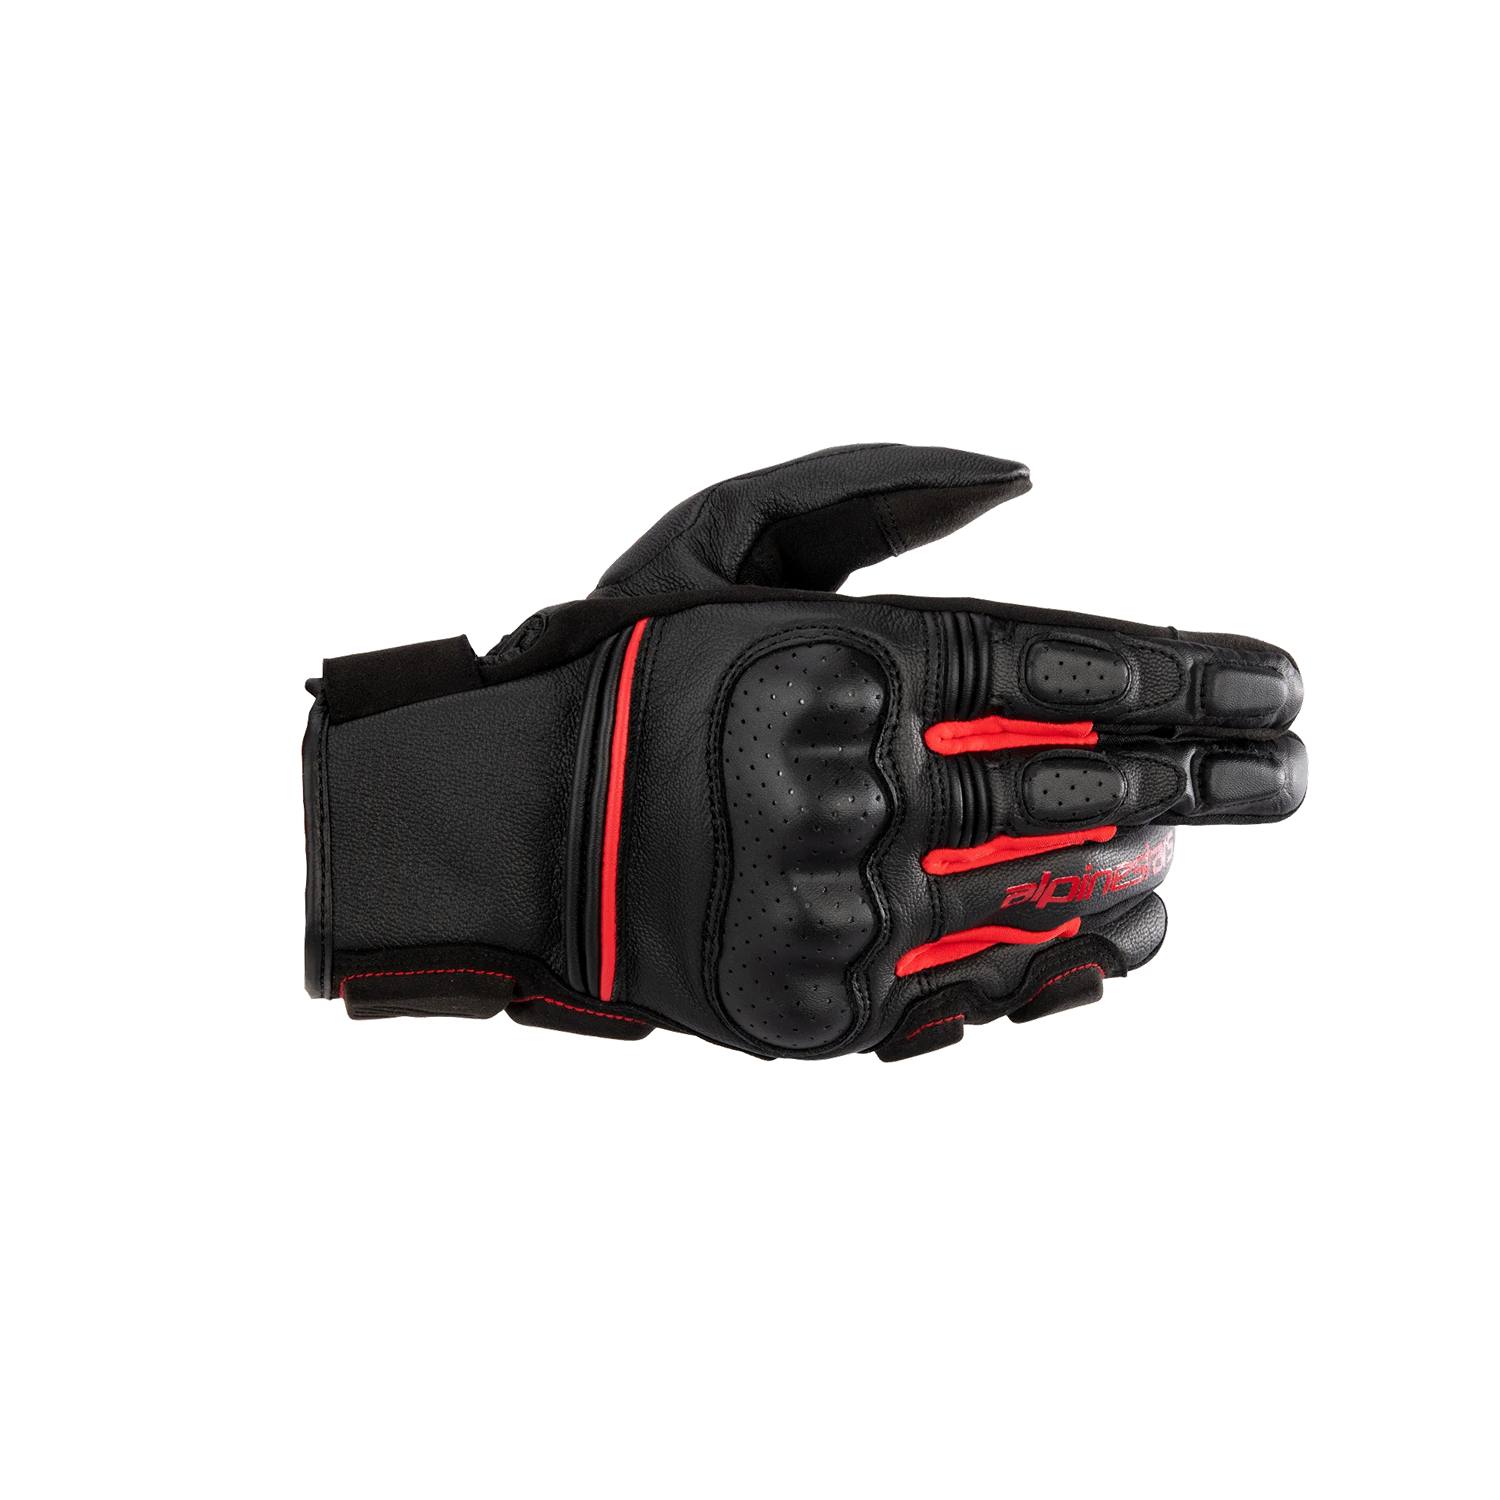 Image of Alpinestars Phenom Leather Gloves Black Bright Red Size 2XL ID 8059347167718